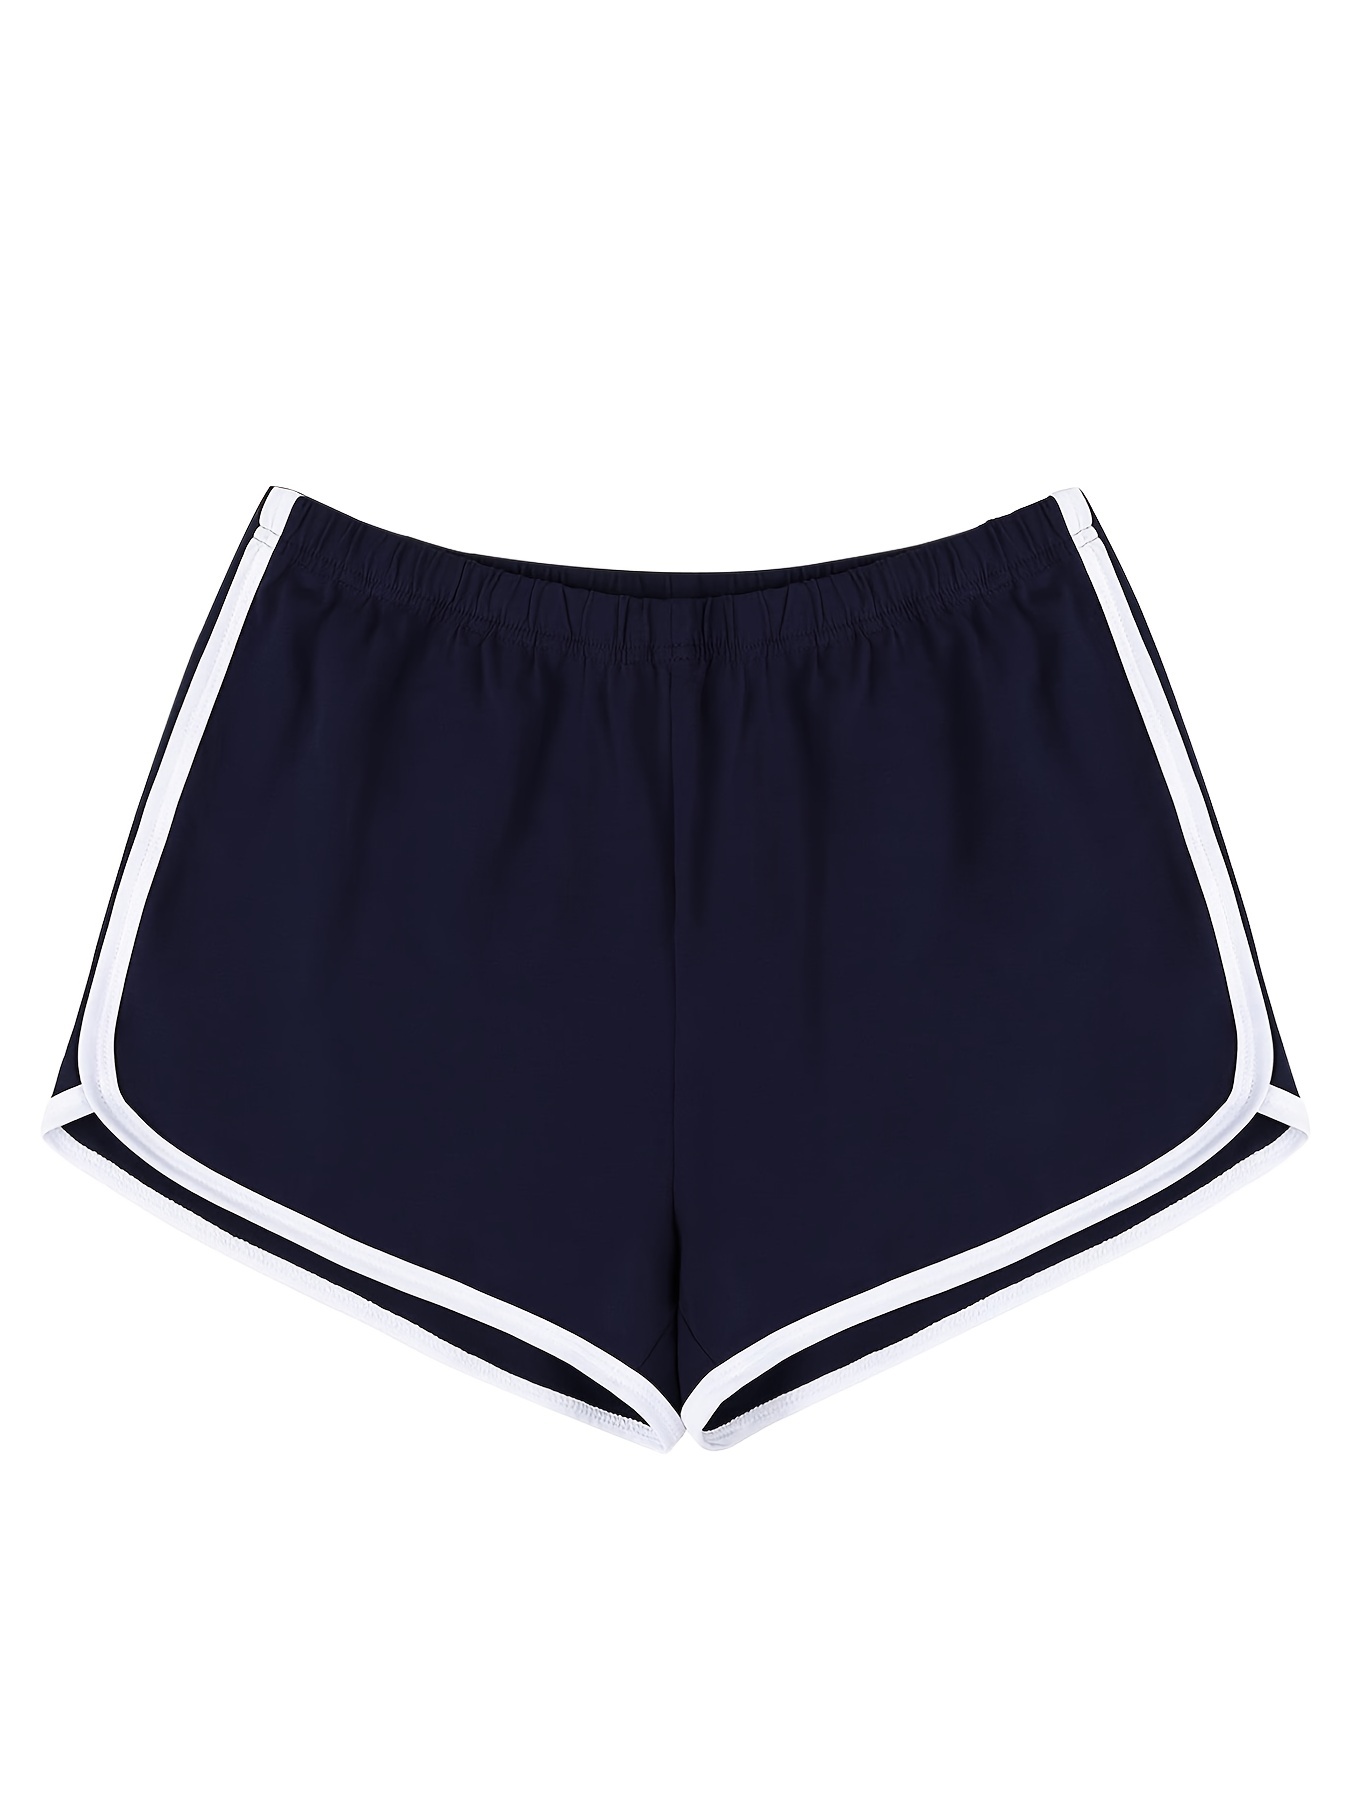 Women Summer Sports Mini Shorts Yoga Gym Jogging Beach Short Pants Underwear